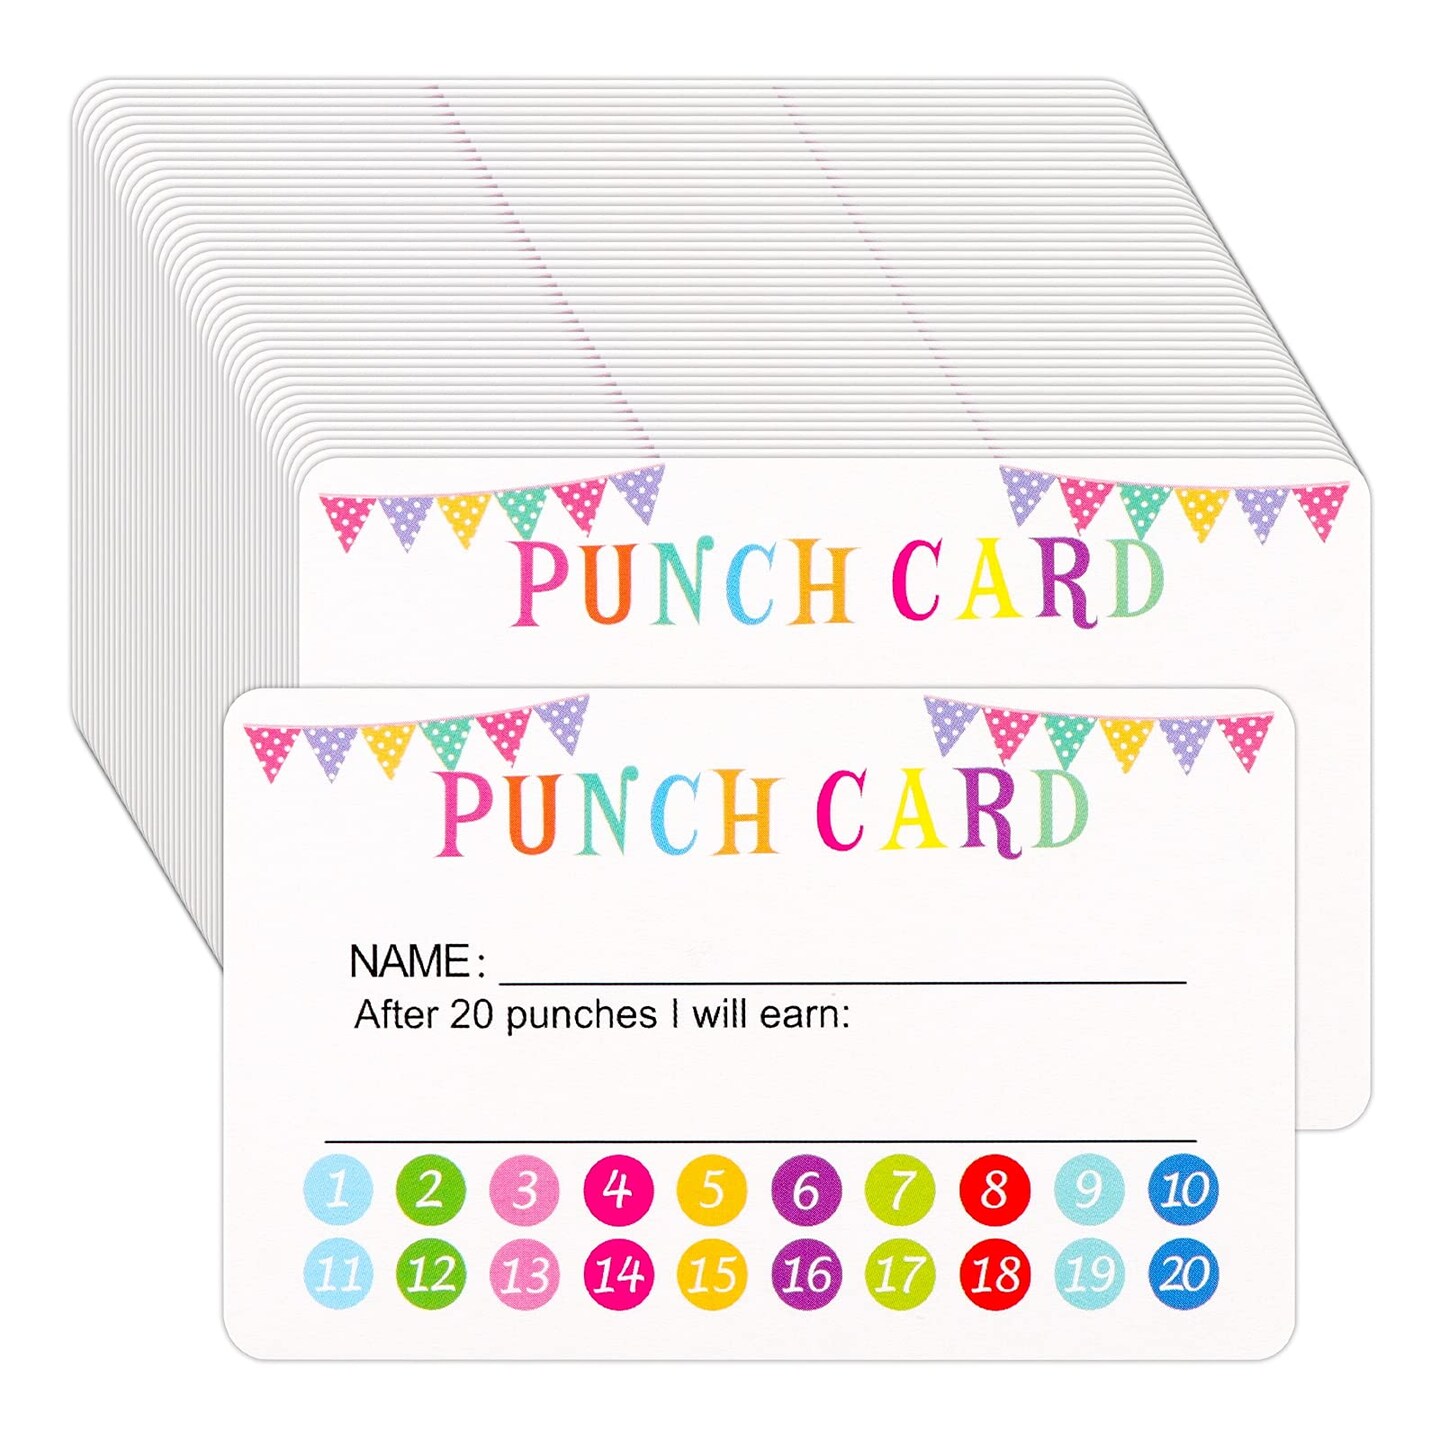 120 Pcs Reward Punch Cards Behavior Incentive Awards for Kids Students Teachers Home Classroom School Business Loyalty Card Positive Reinforcement Tool - 2&#x22; x 3.5&#x22;